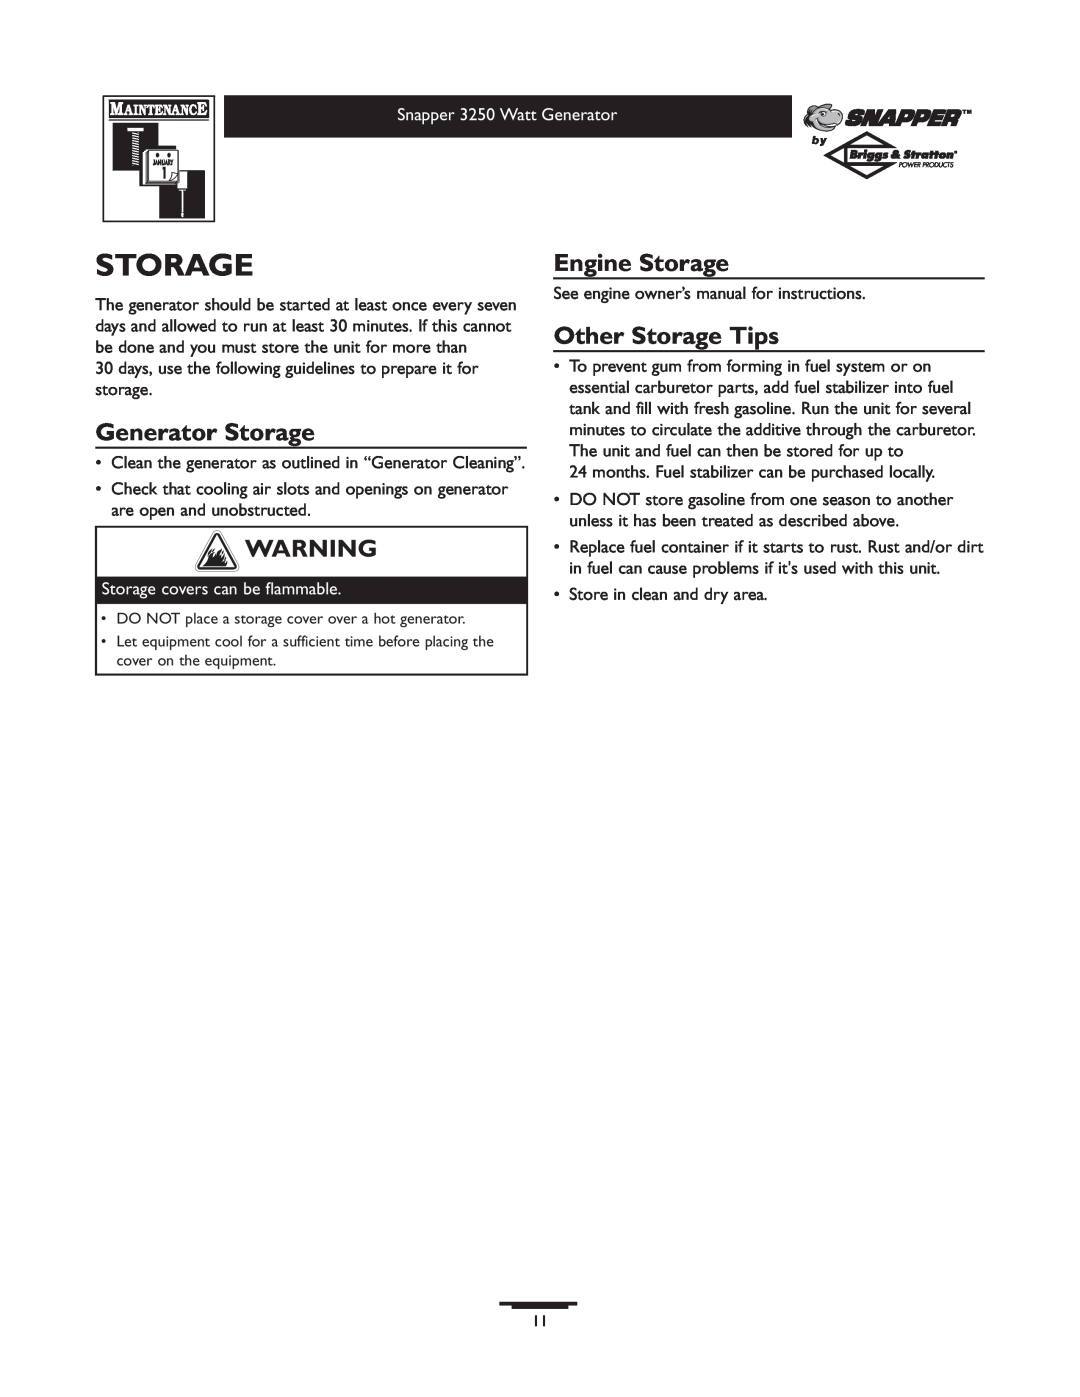 Snapper 3250 owner manual Generator Storage, Engine Storage, Other Storage Tips, Storage covers can be flammable 